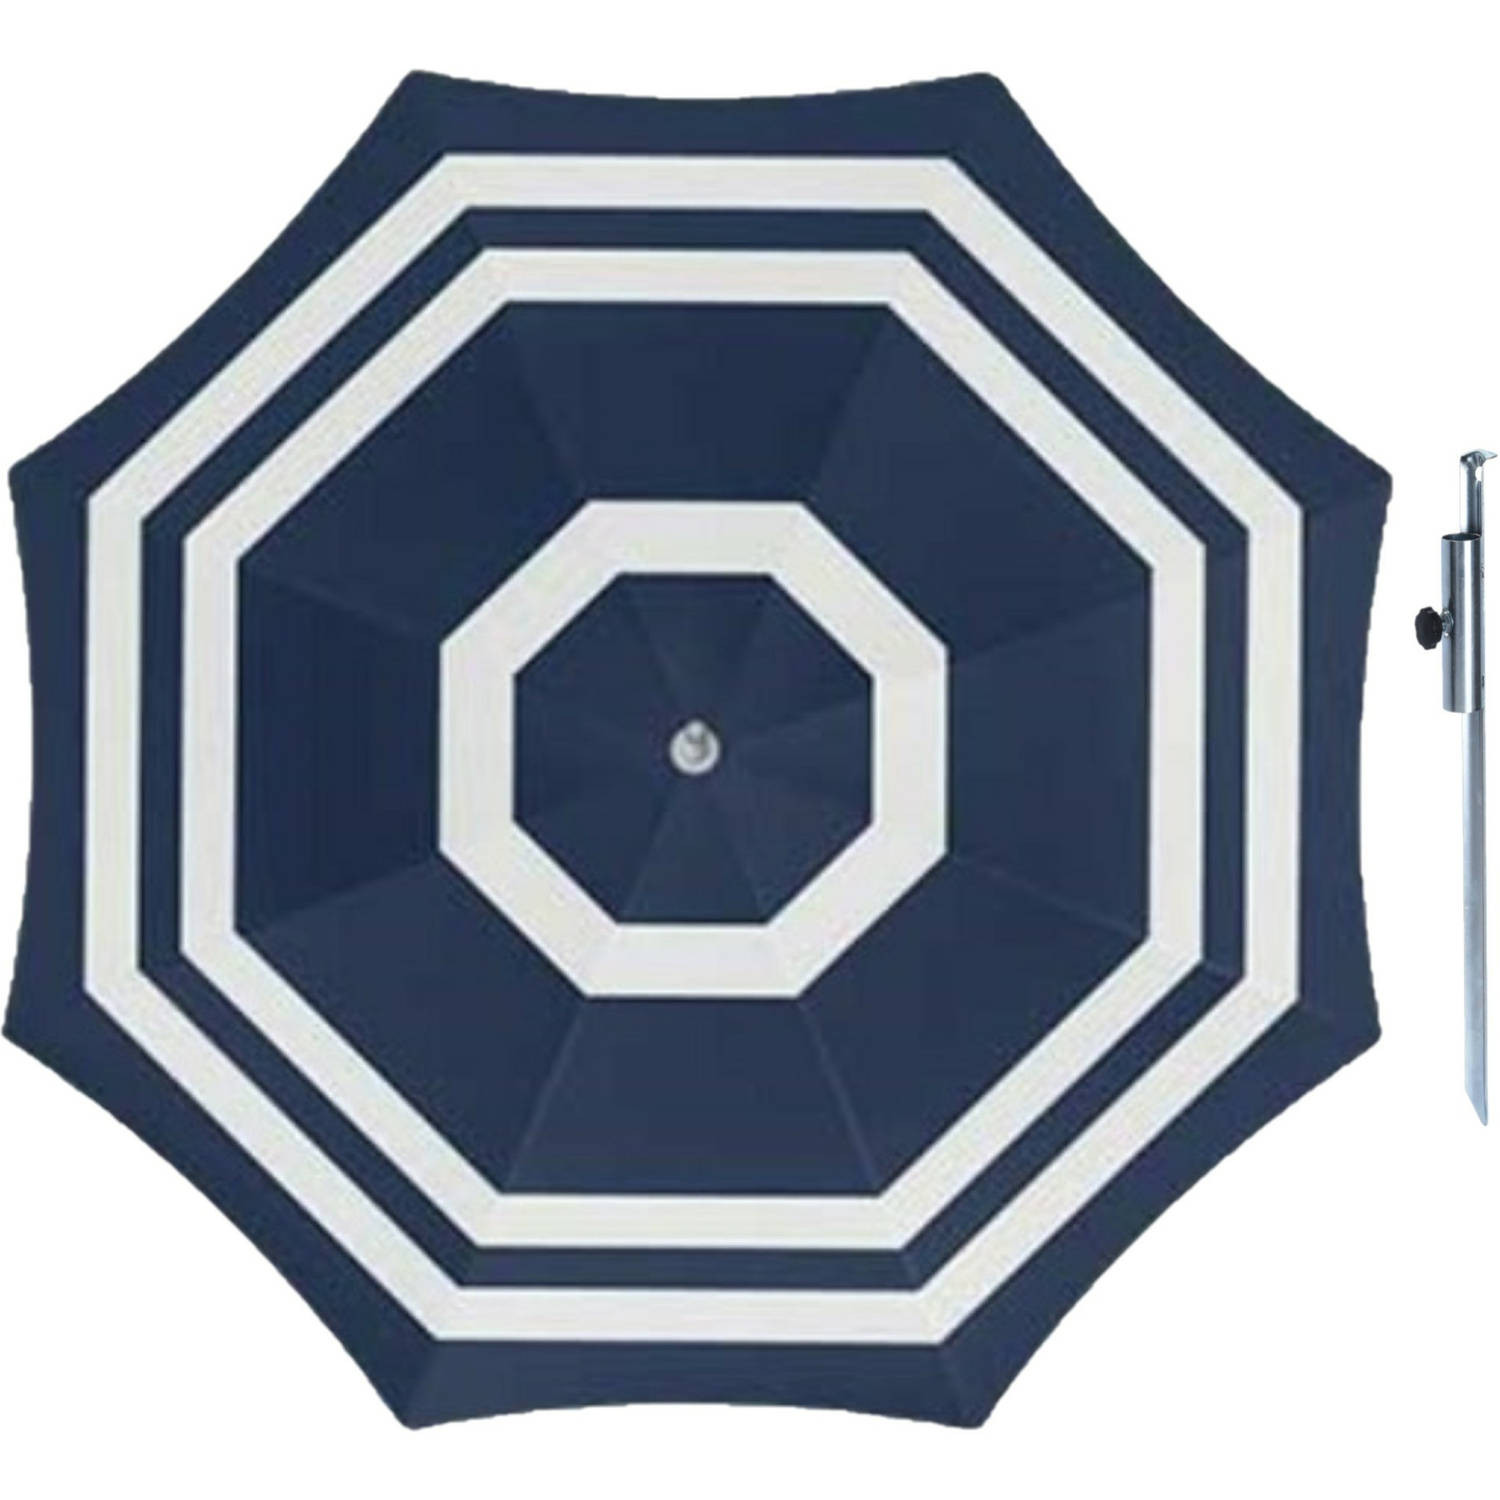 Parasol - Blauw/wit - D180 cm - incl. draagtas - parasolharing - 49 cm - Parasols